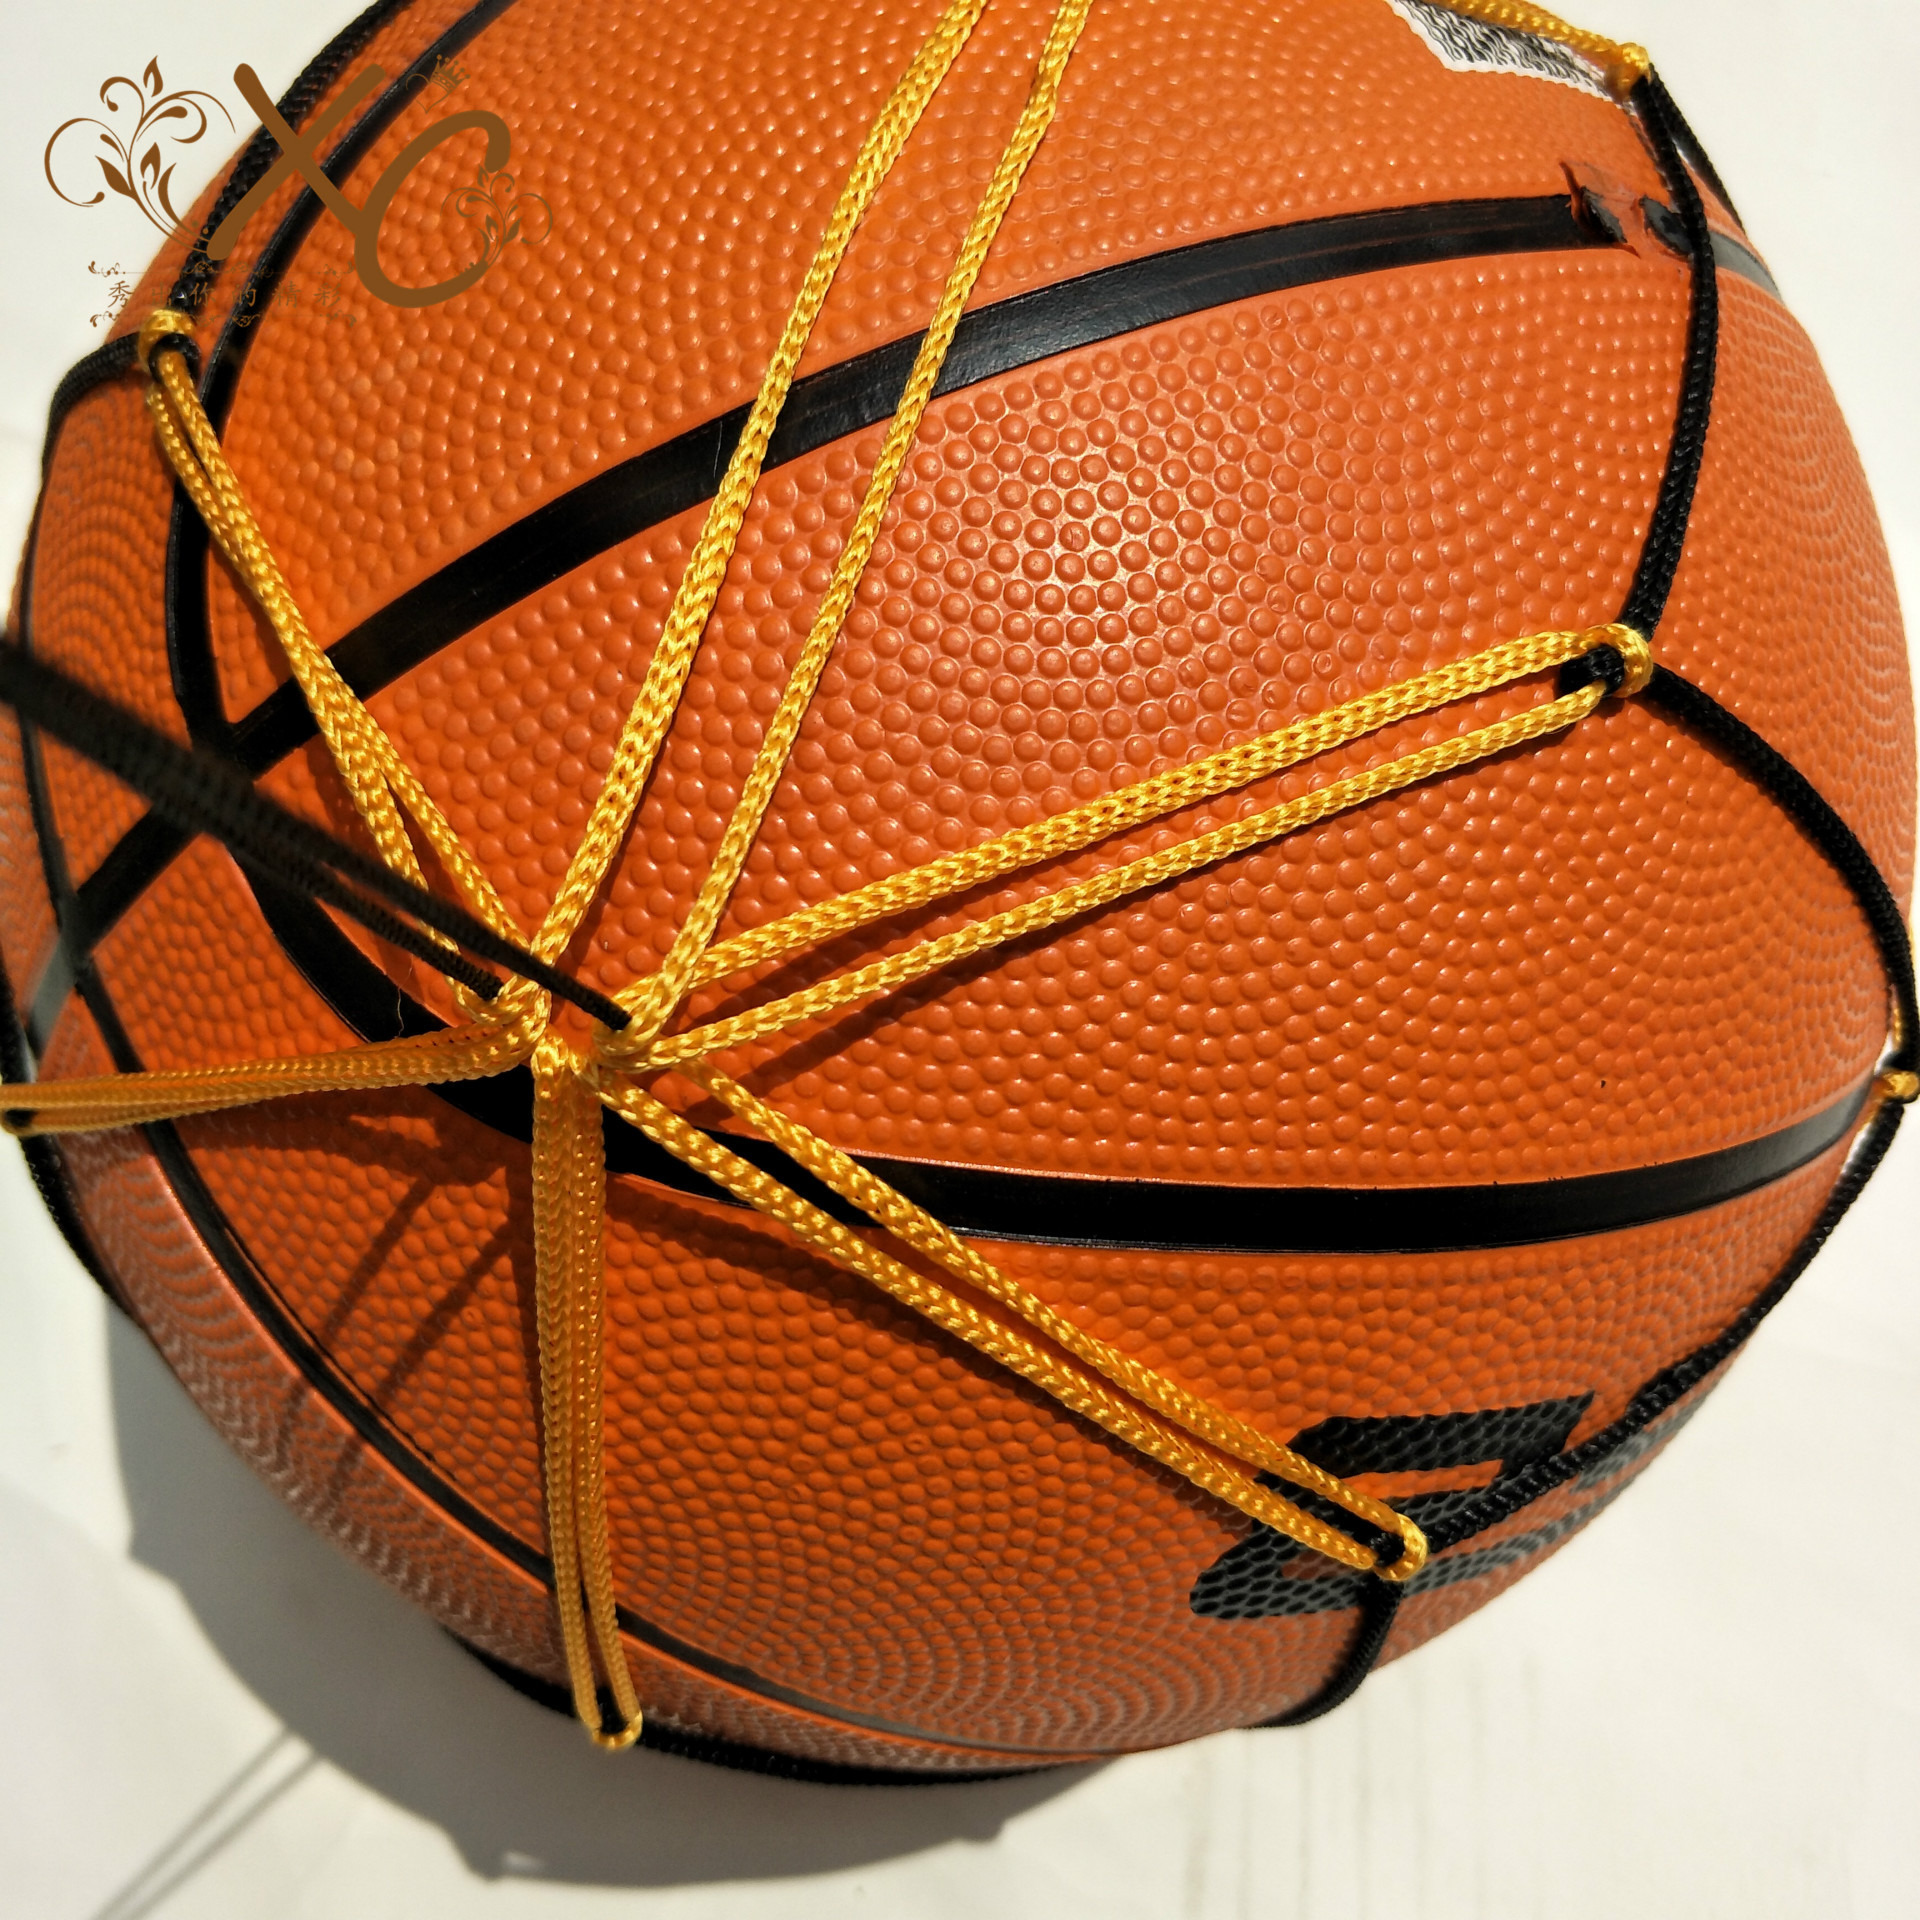 [Show off]Net Bag Ball pocket volleyball football Basketball Black and yellow Netbag